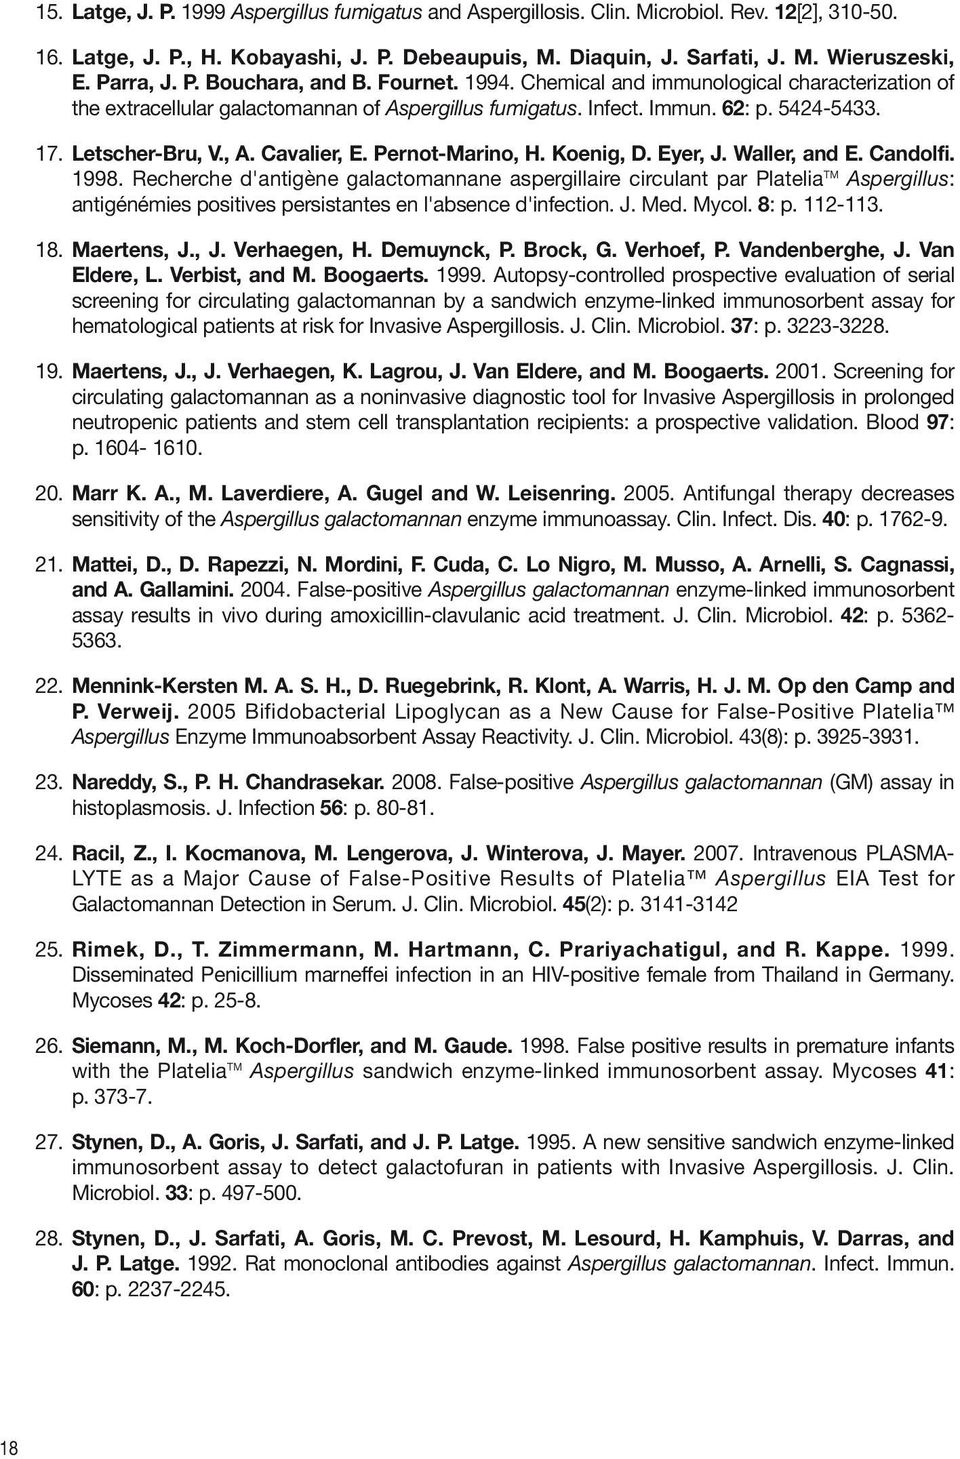 Letscher-Bru, V., A. Cavalier, E. Pernot-Marino, H. Koenig, D. Eyer, J. Waller, and E. Candolfi. 1998.